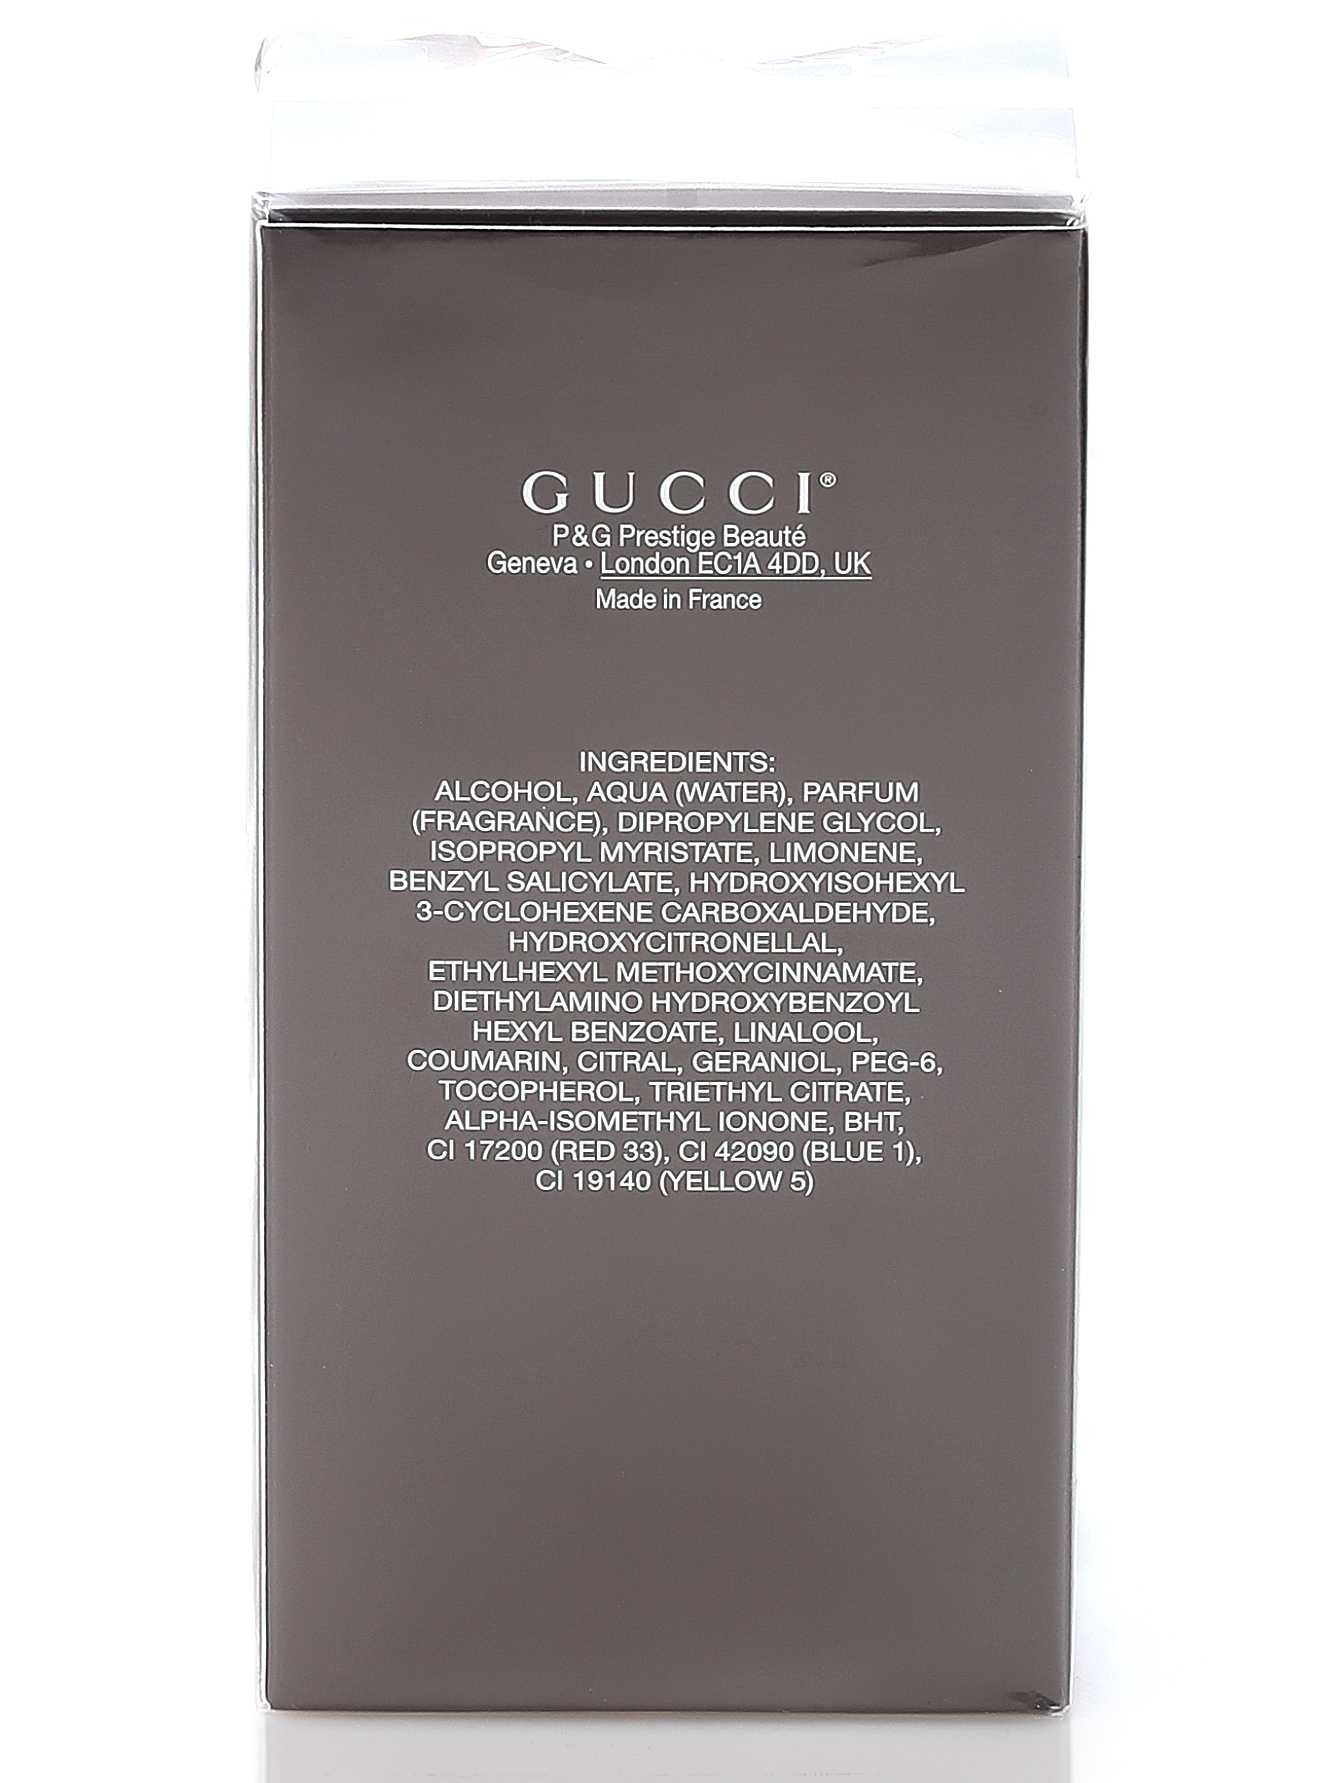 Туалетная вода - Gucci by Gucci Pour Homme, 90ml - Модель Верх-Низ